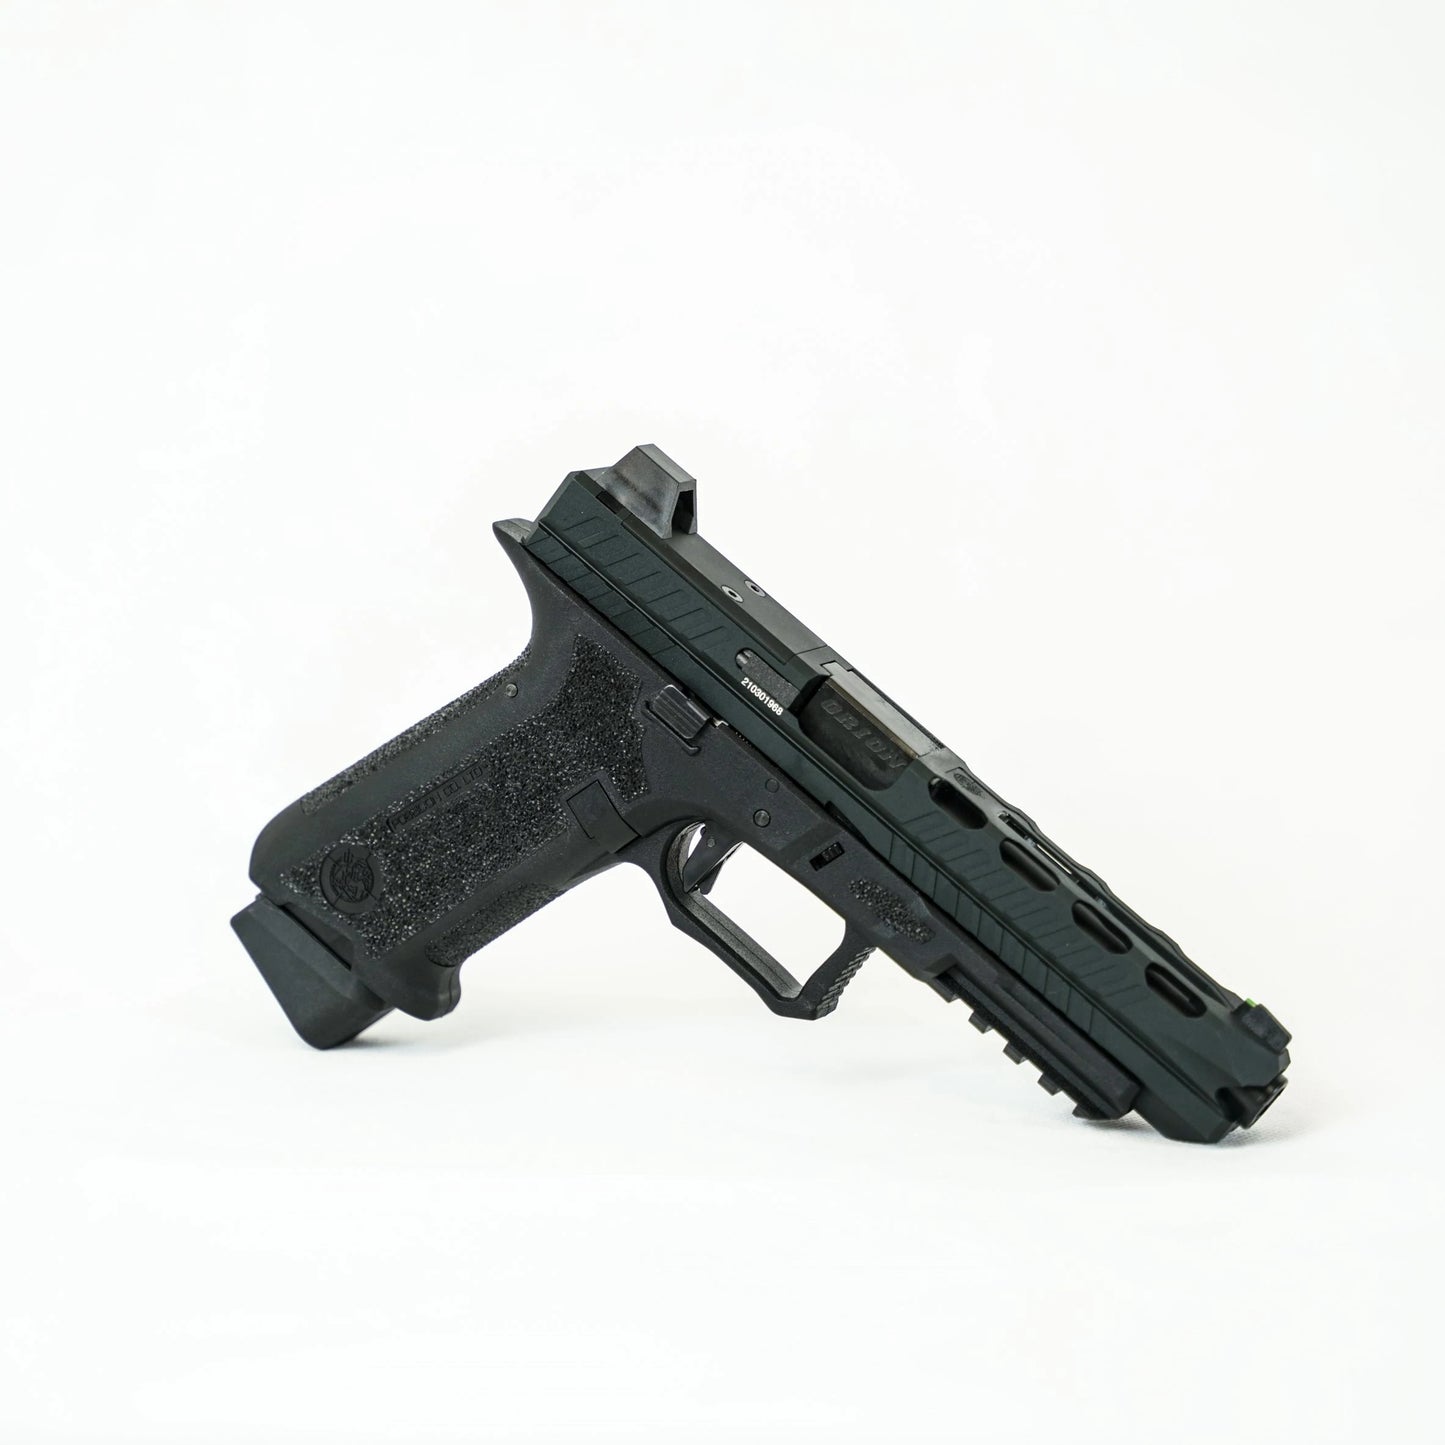 Poseidon/RPM Orion-III Performance GBB Pistol - Gel Blaster Guns, Pistols, Handguns, Rifles For Sale